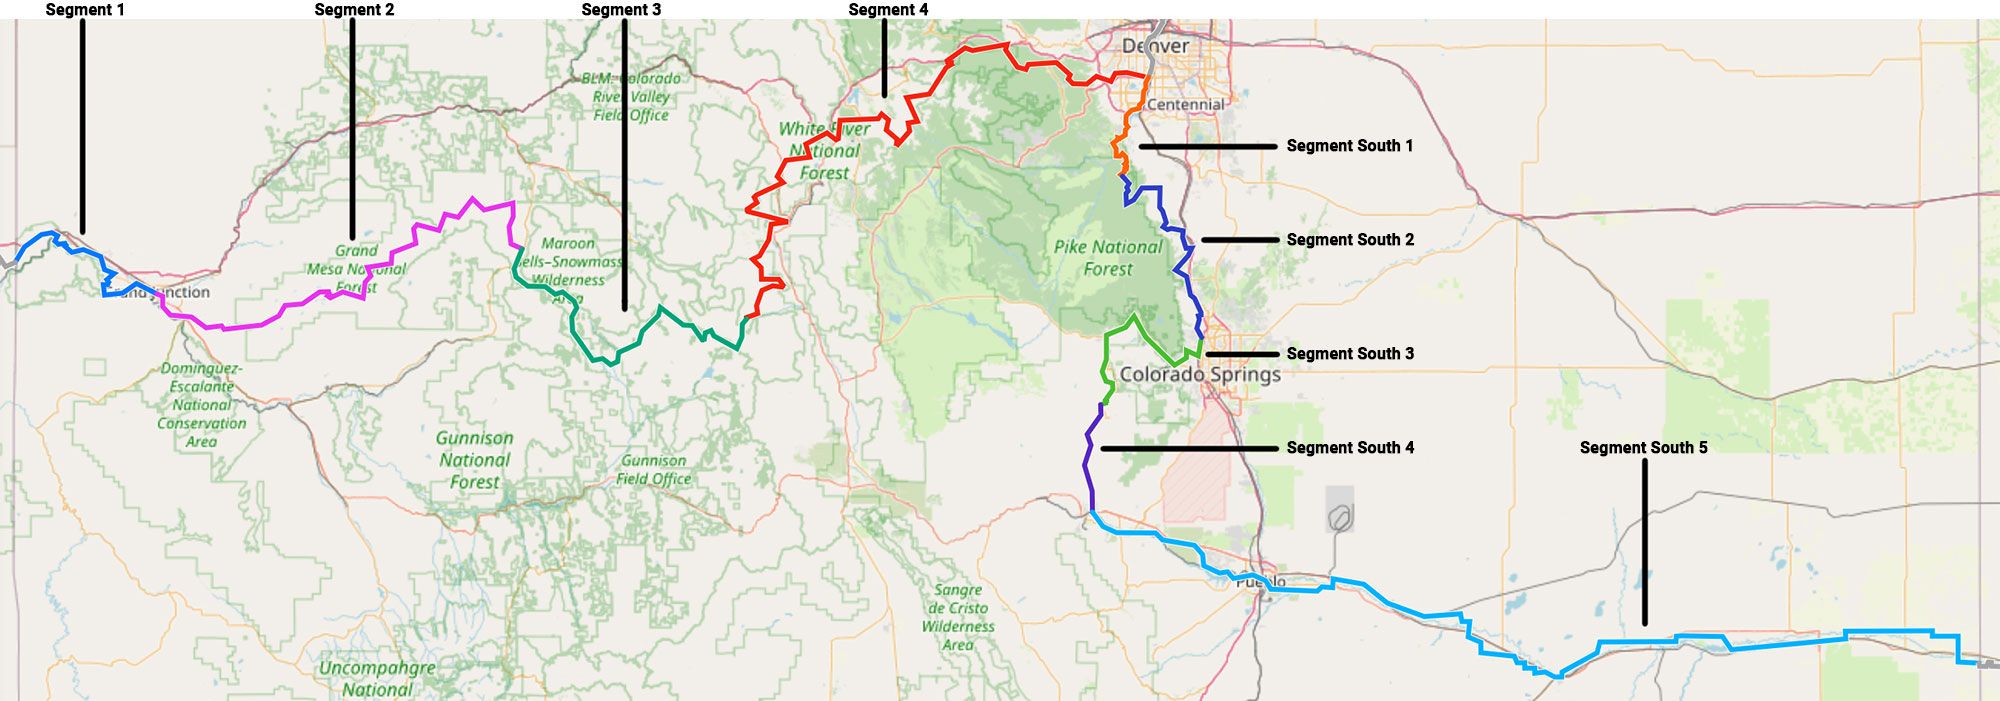 Colorado (Southern Route)